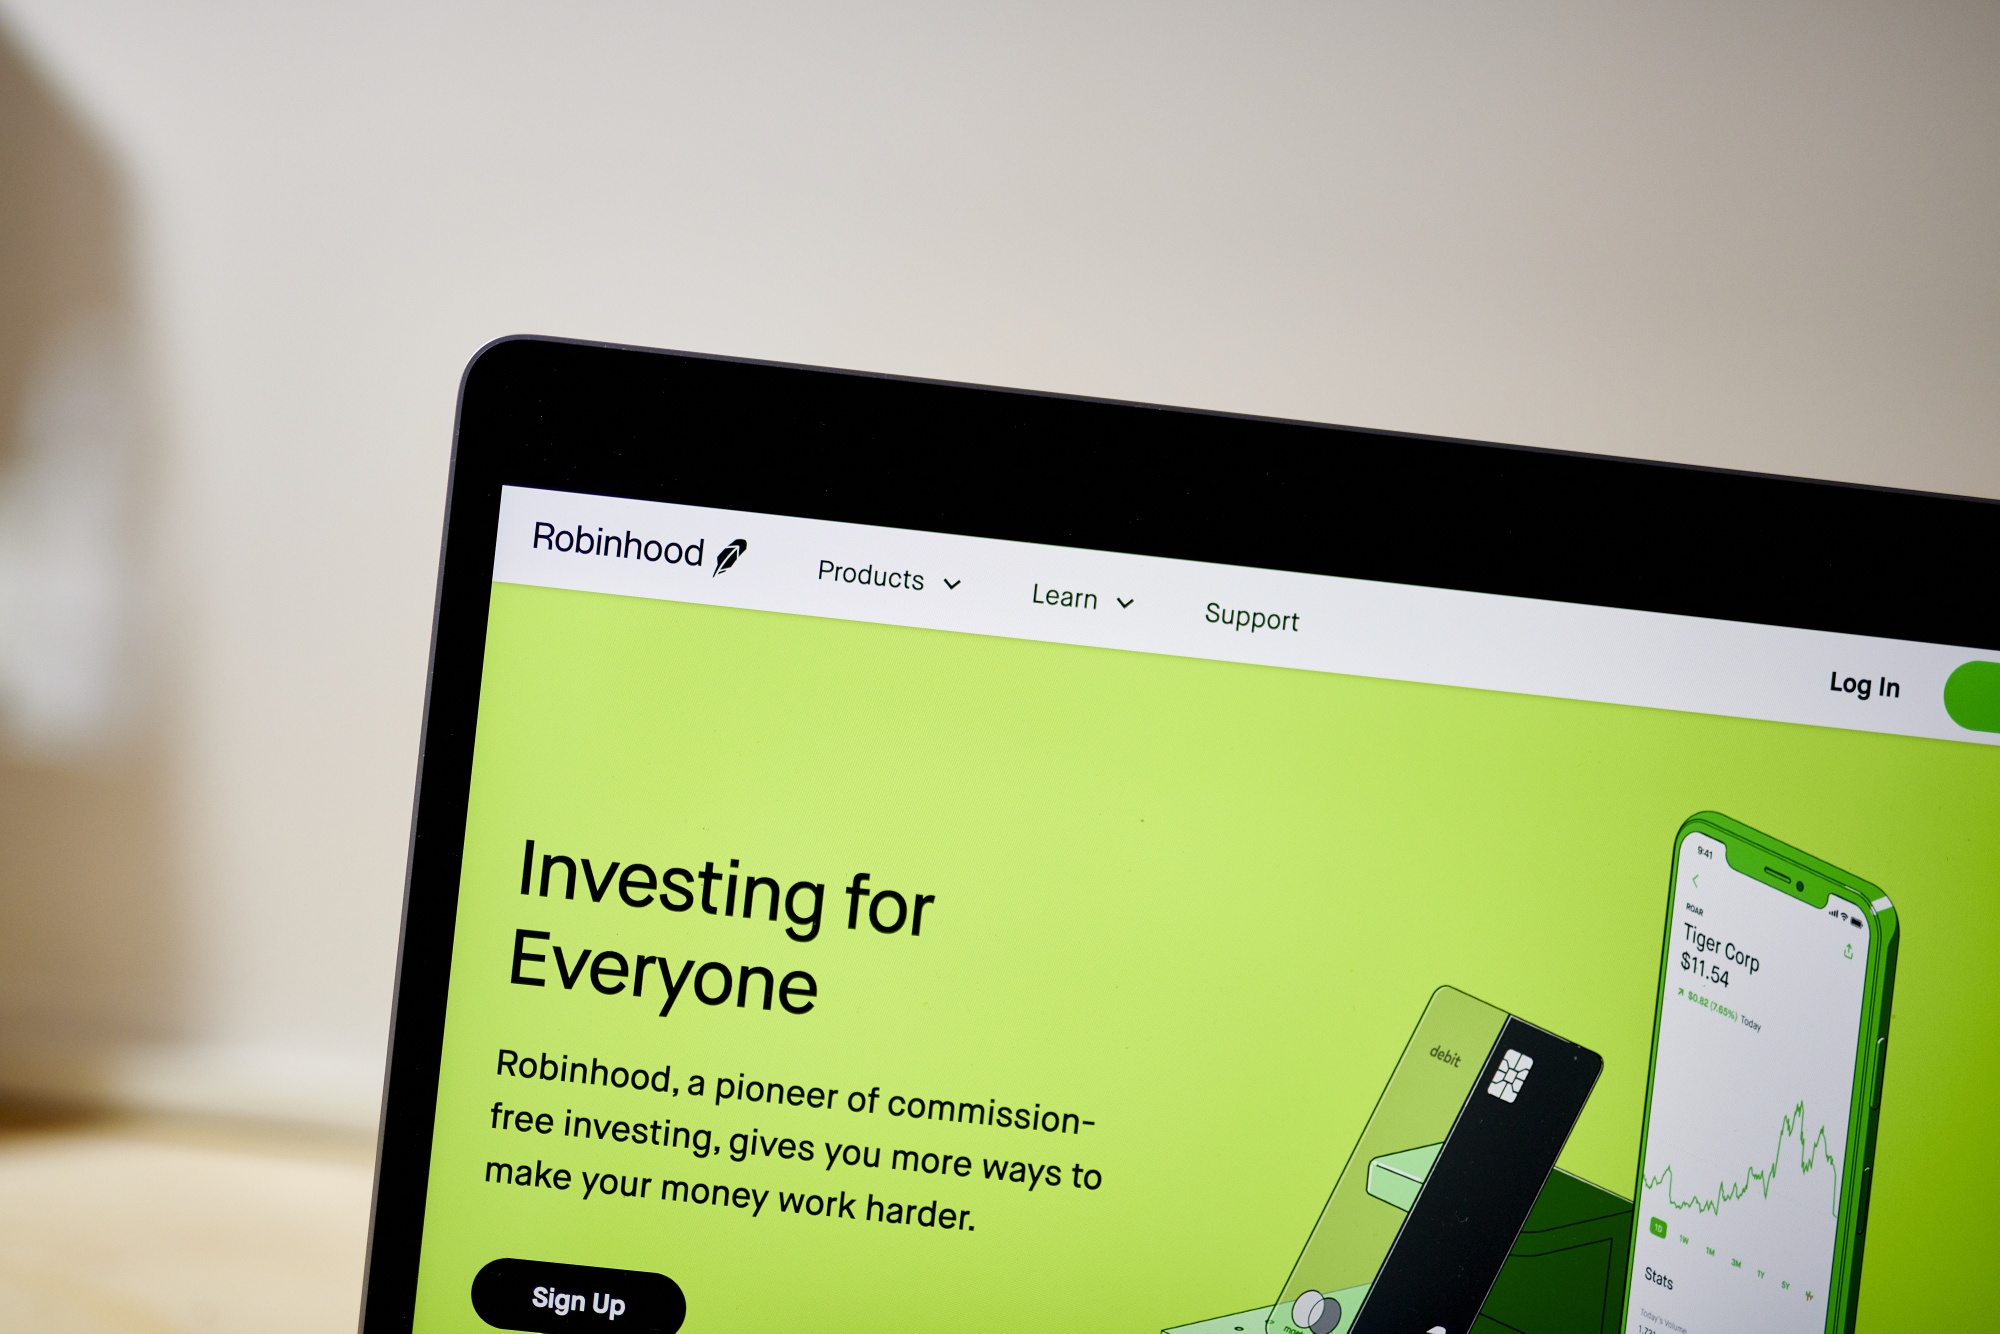 The website home screen for Robinhood Markets Inc.